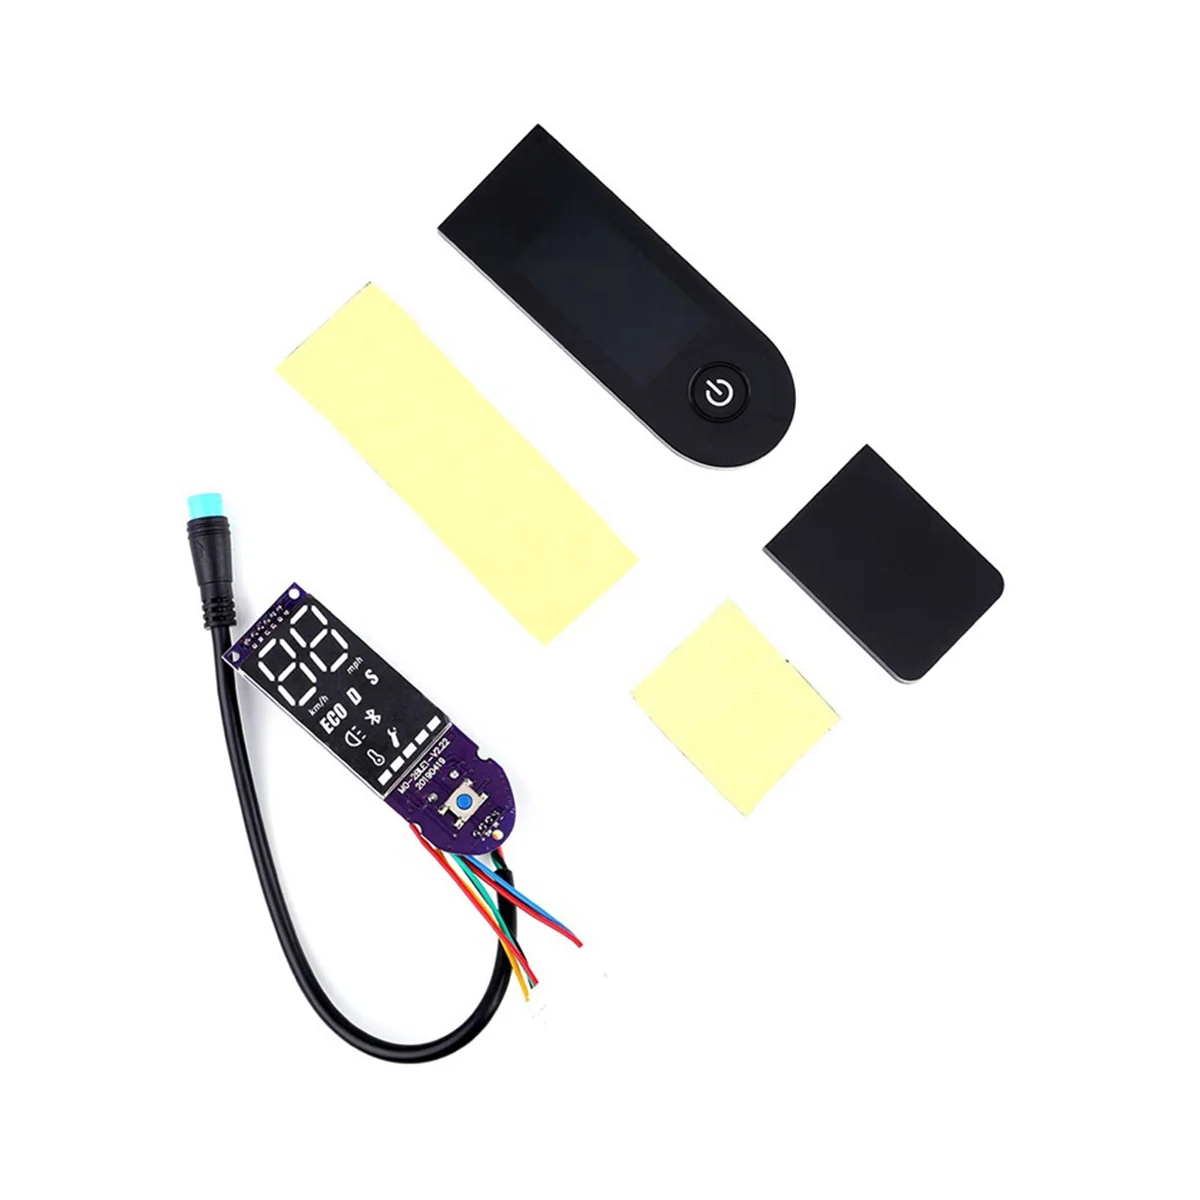 

Аксессуары для электрического скутера M365, исходный код Pro Meter Switch Pro Meter Bluetooth Board